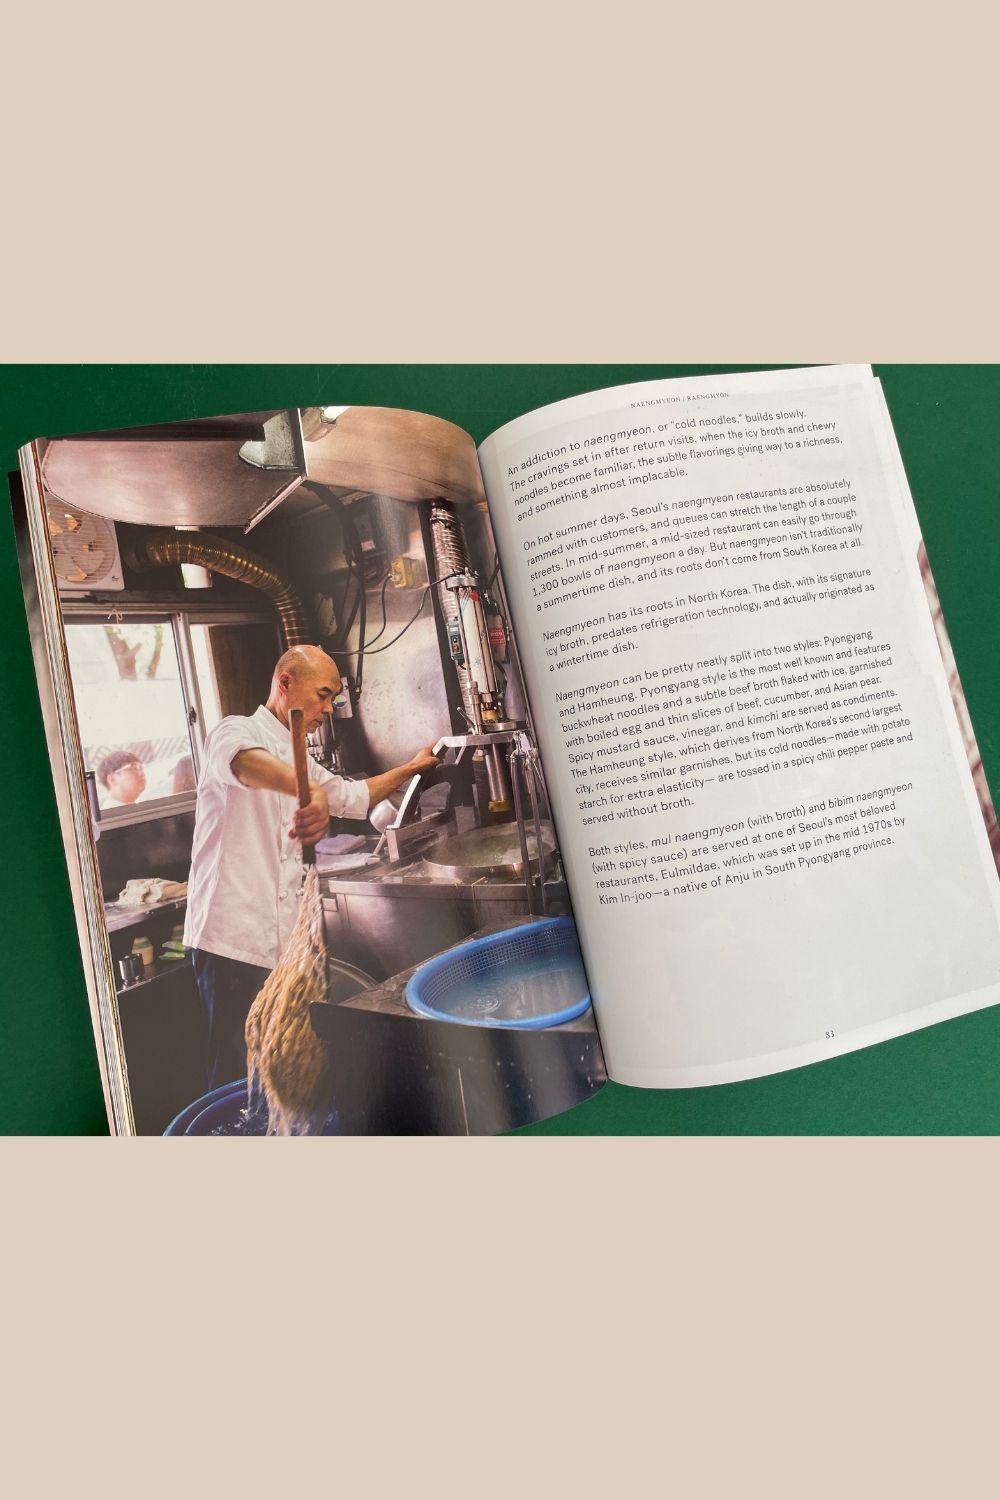 Inside Issue 4 of Fare Magazine - Seoul cuisine